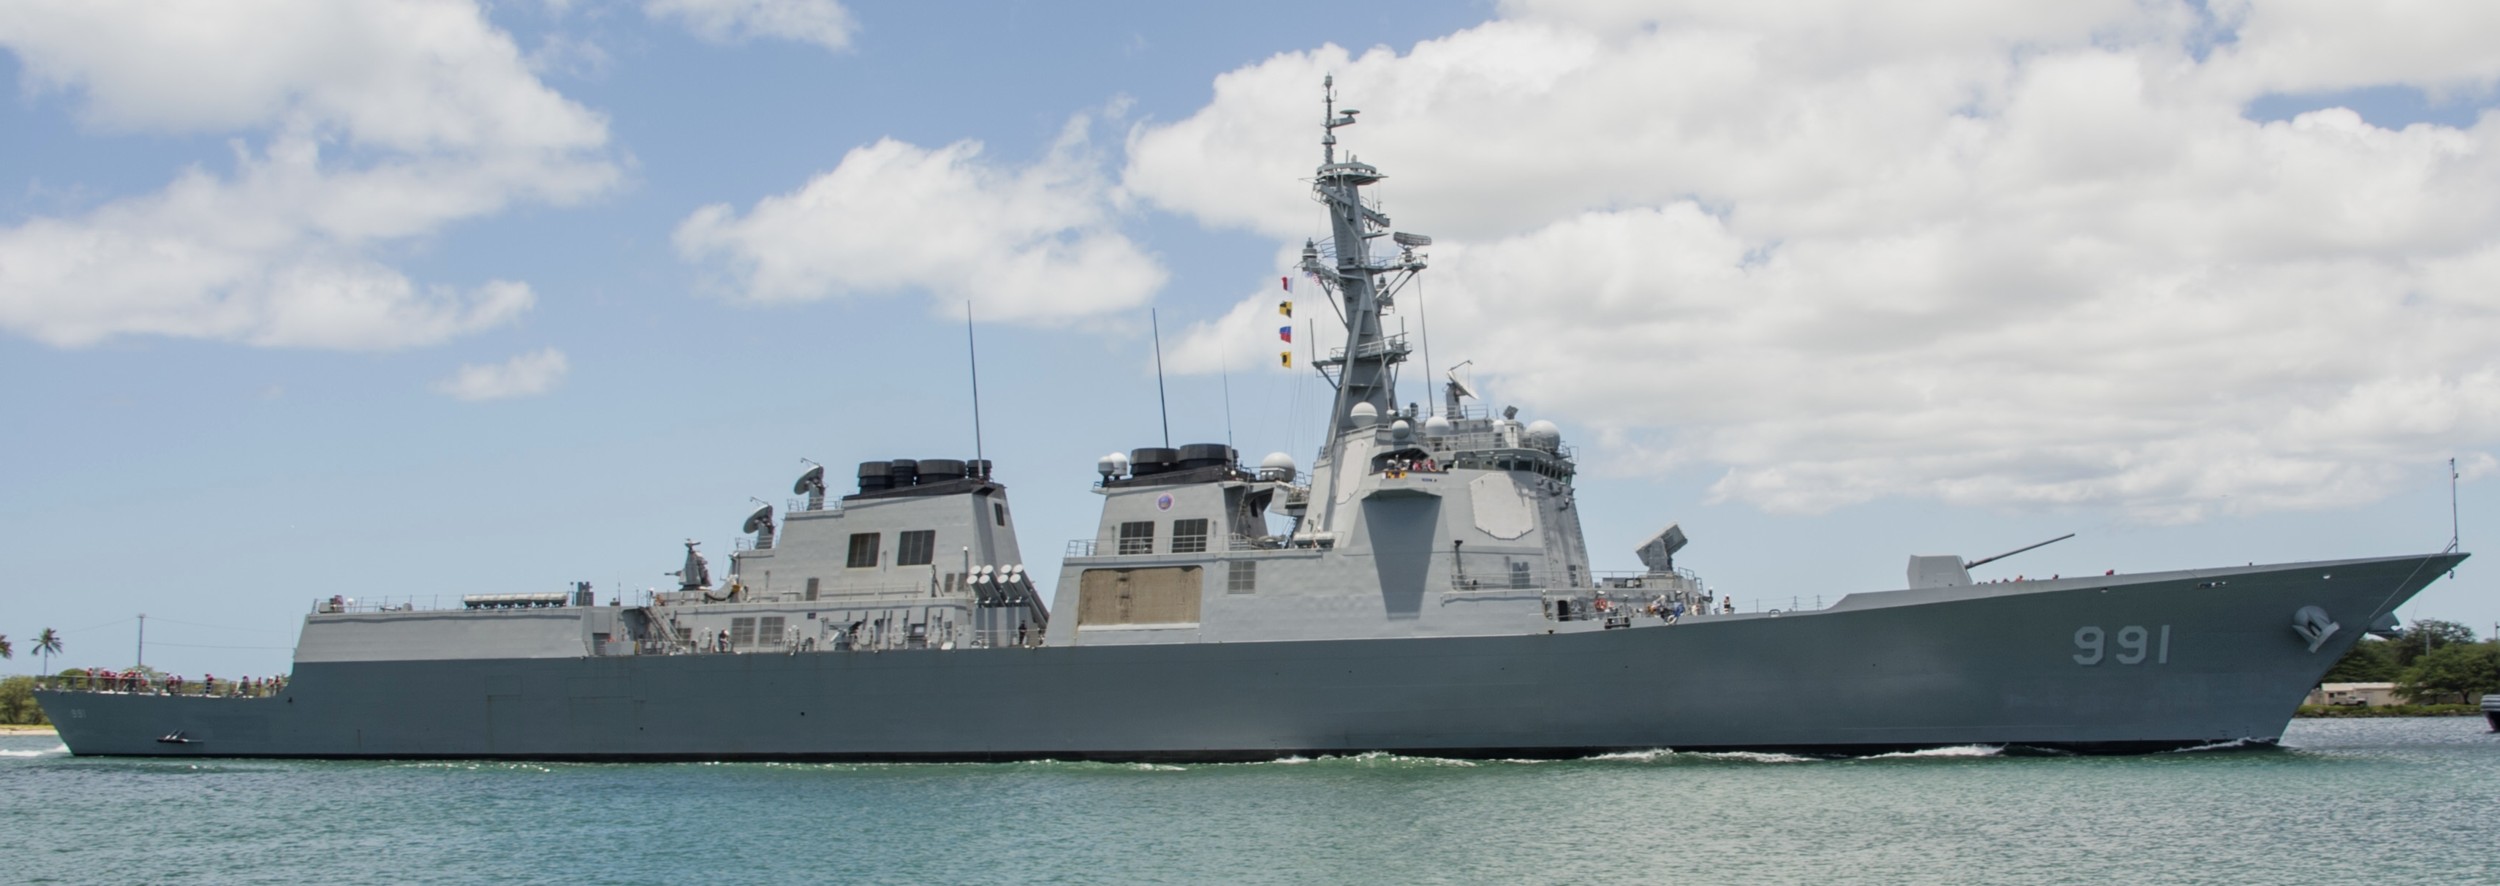 ddg-991 roks sejong the great guided missile destroyer aegis republic of korea navy rok 26 rimpac hawaii